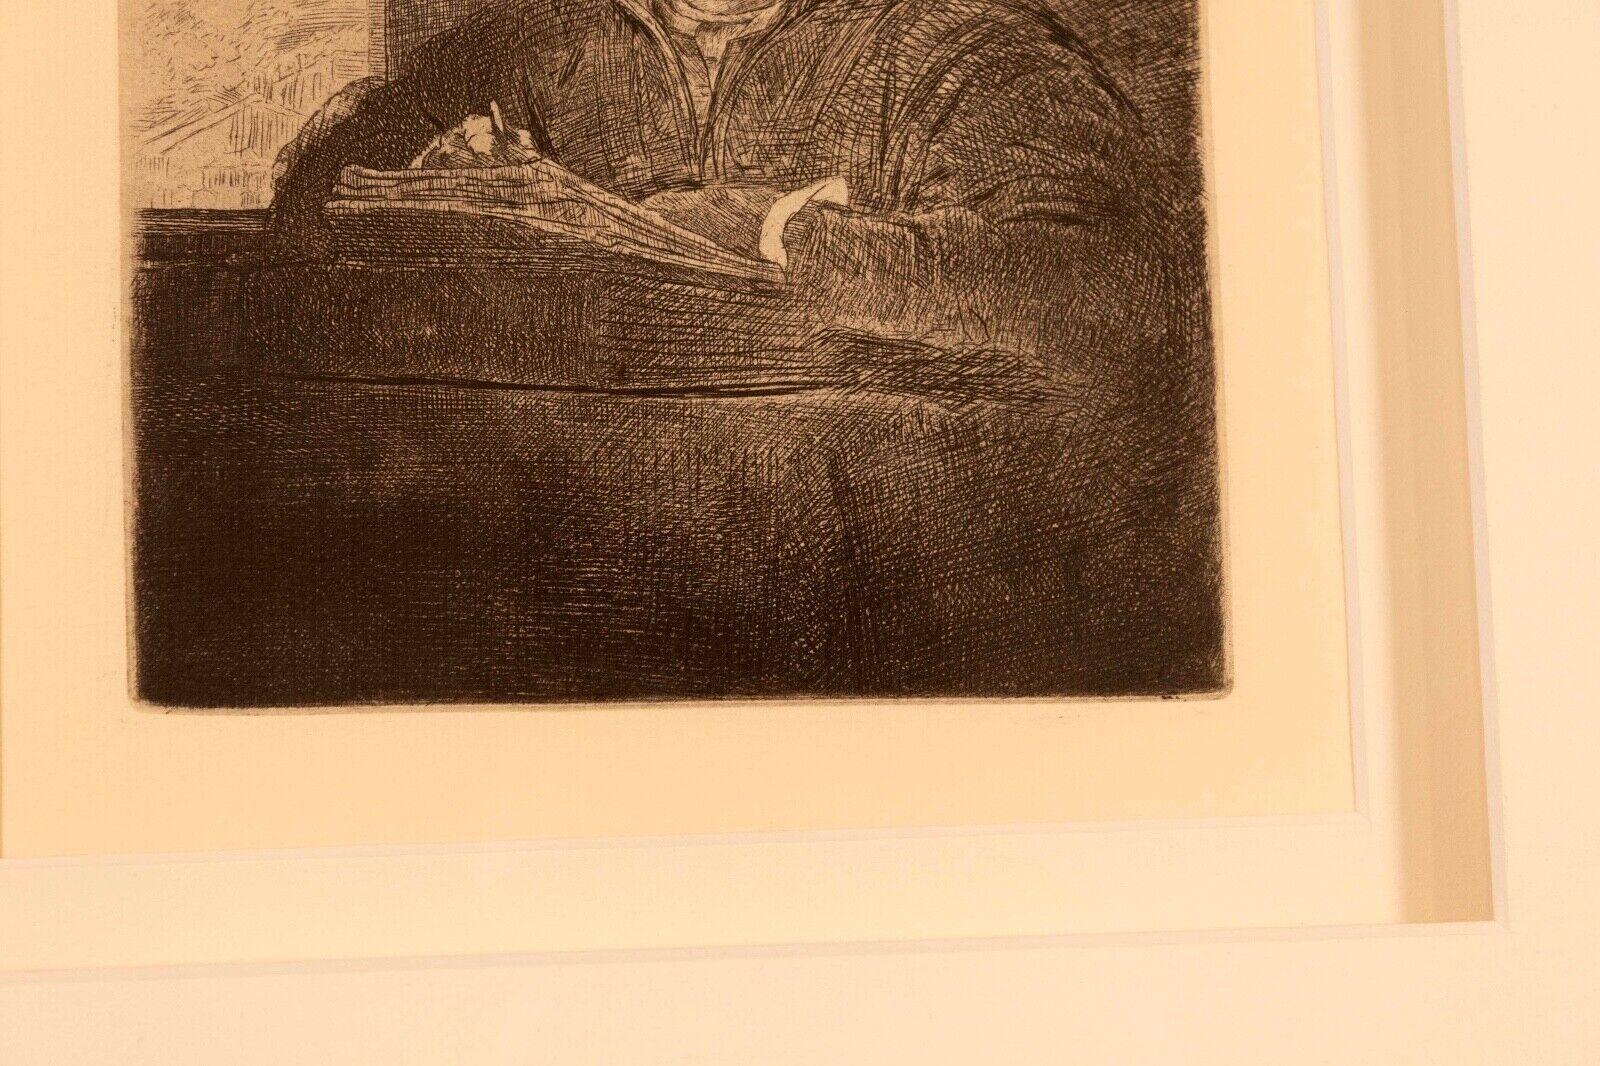 Paper Rembrandt Van Rijn Self Portrait Drawing at Window 1648 Etching Millenium Ed. For Sale